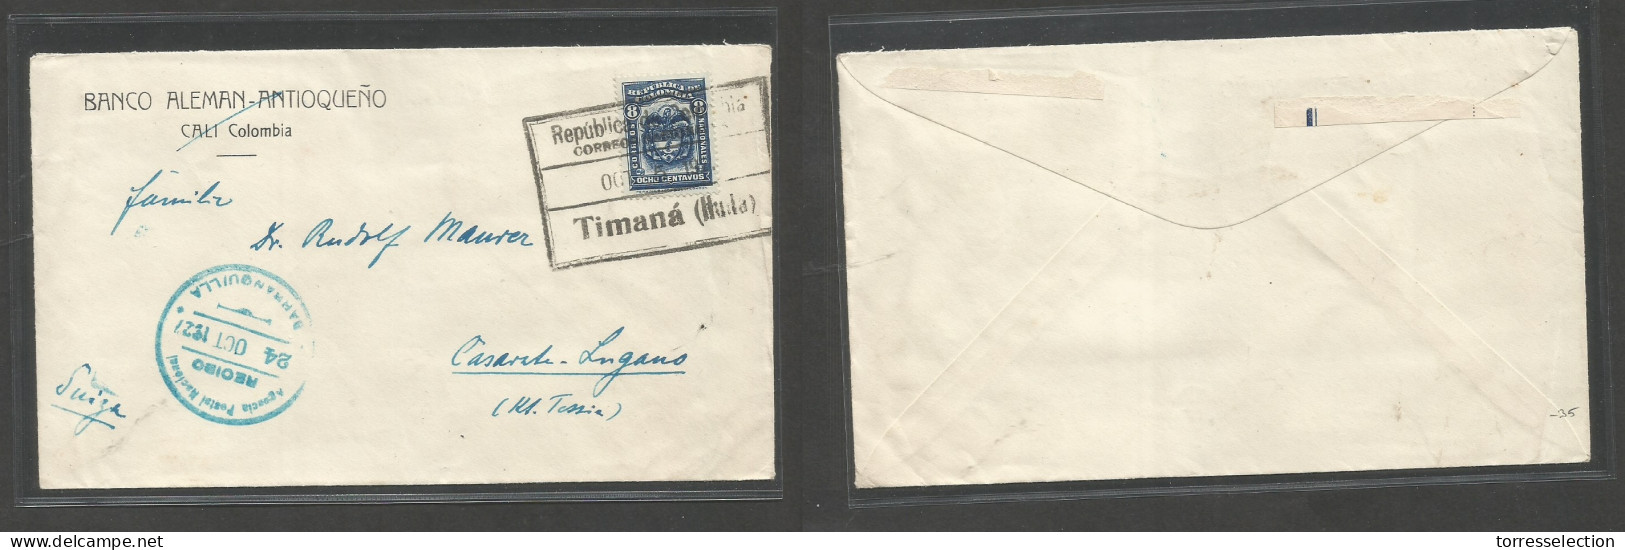 COLOMBIA. 1927 (5 Oct) Timana, Huda - Switzerland, Lugano Via Barranquilla. Fkd Comercial Envelope. Fine Town Usage. SAL - Kolumbien